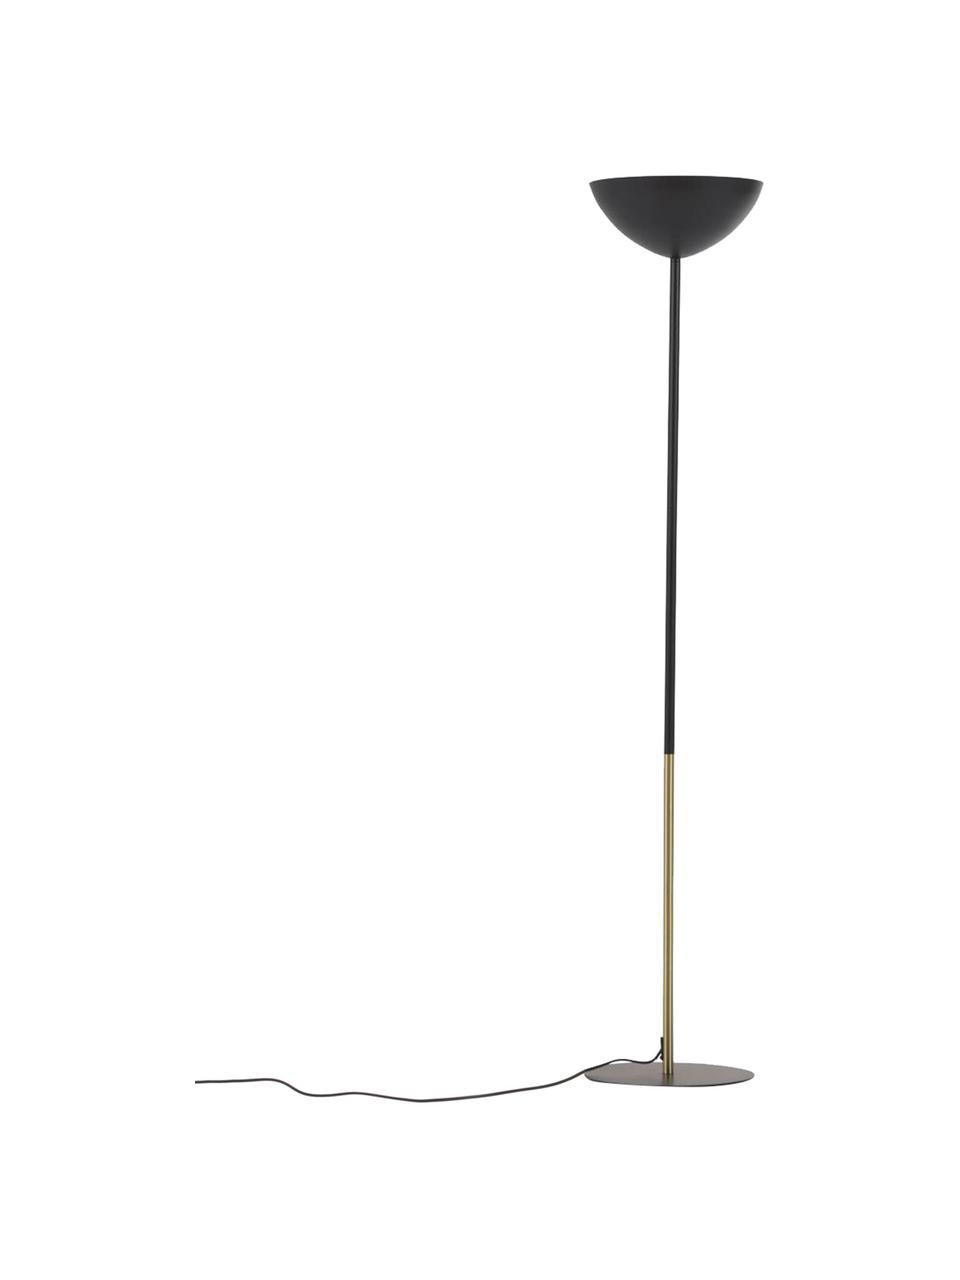 Uplighter Eglantina in zwart/goud, Lampenkap: gecoat metaal, Lampvoet: gecoat metaal, Zwart, goudkleurig, Ø 30 cm x H 155 cm